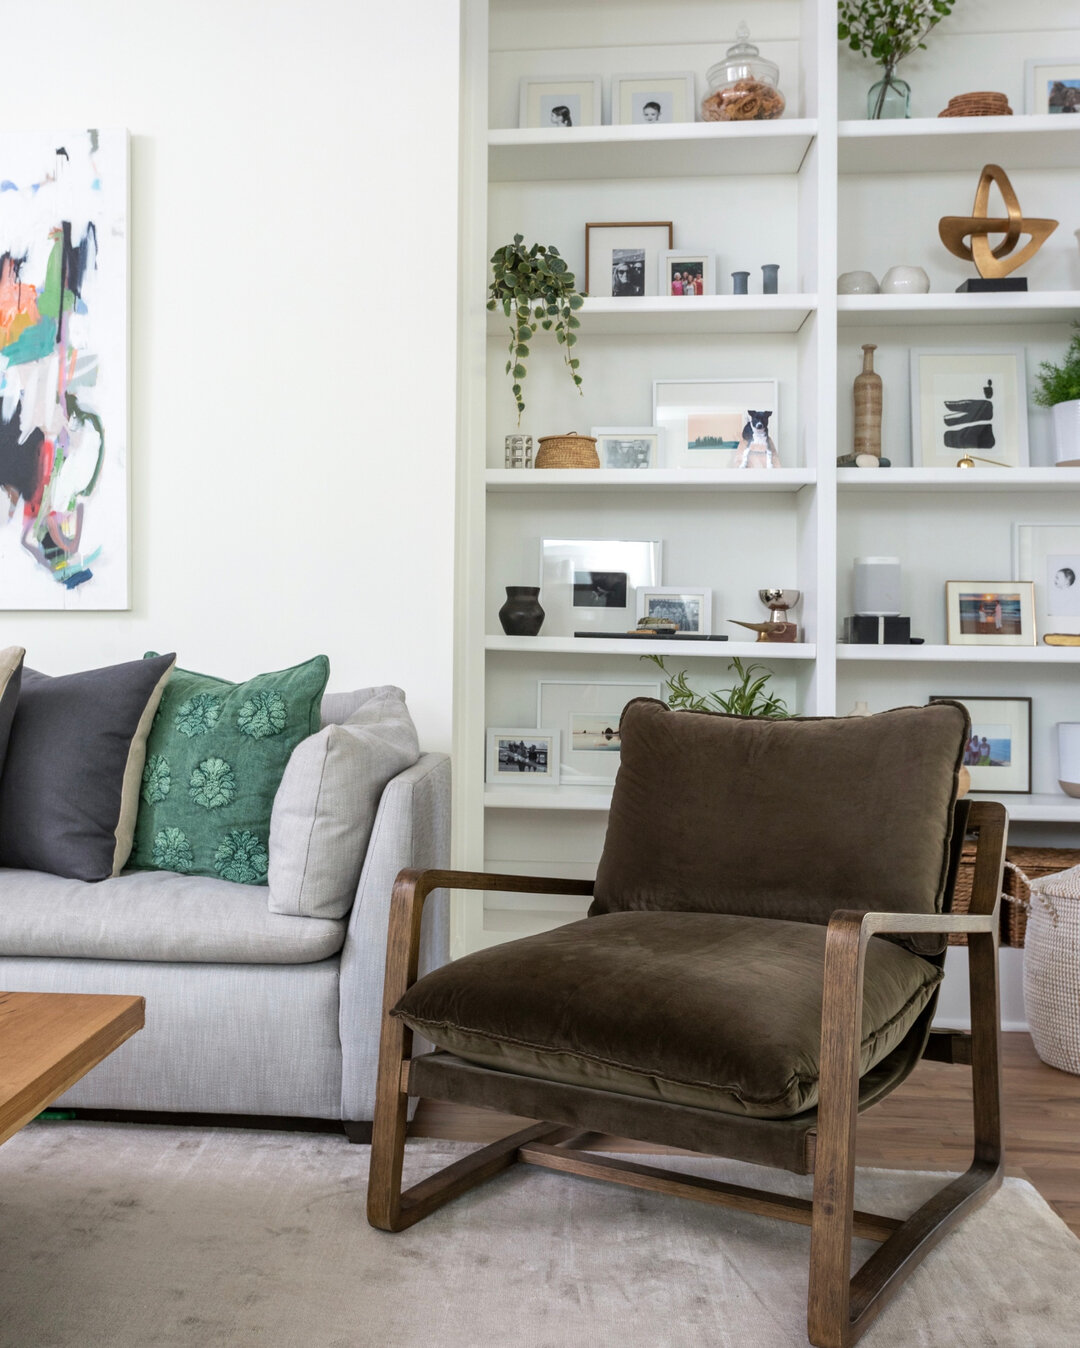 I love a cozy corner.​​​​​​​​​

Photographer: @heidiface
Interior Design: @meredithpettyinteriors